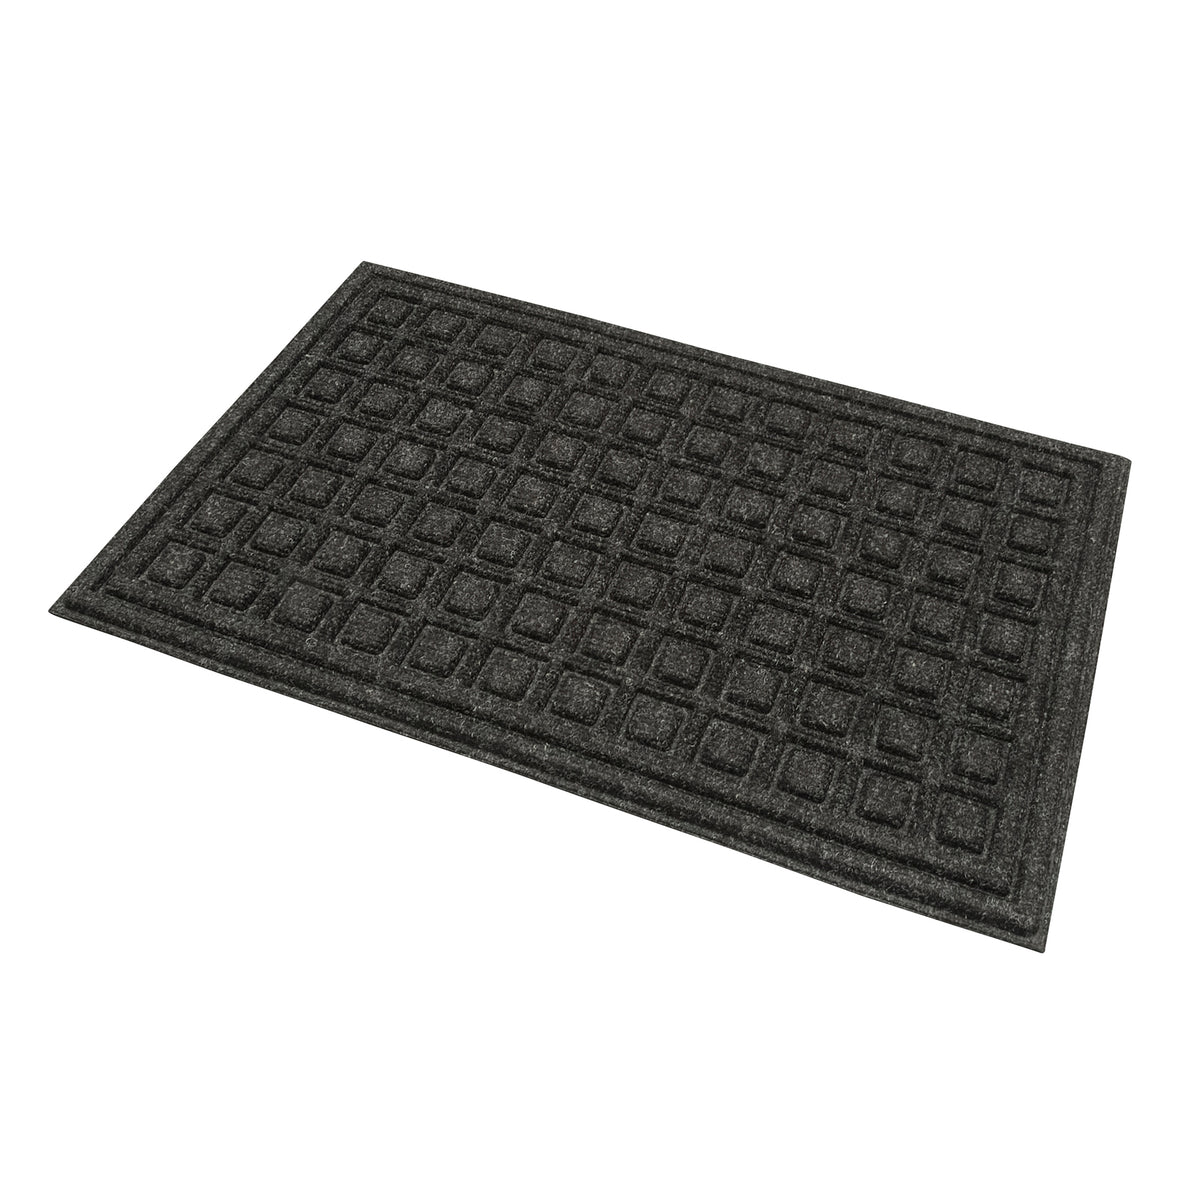 Ecomat Recycled Doormat - Blocks